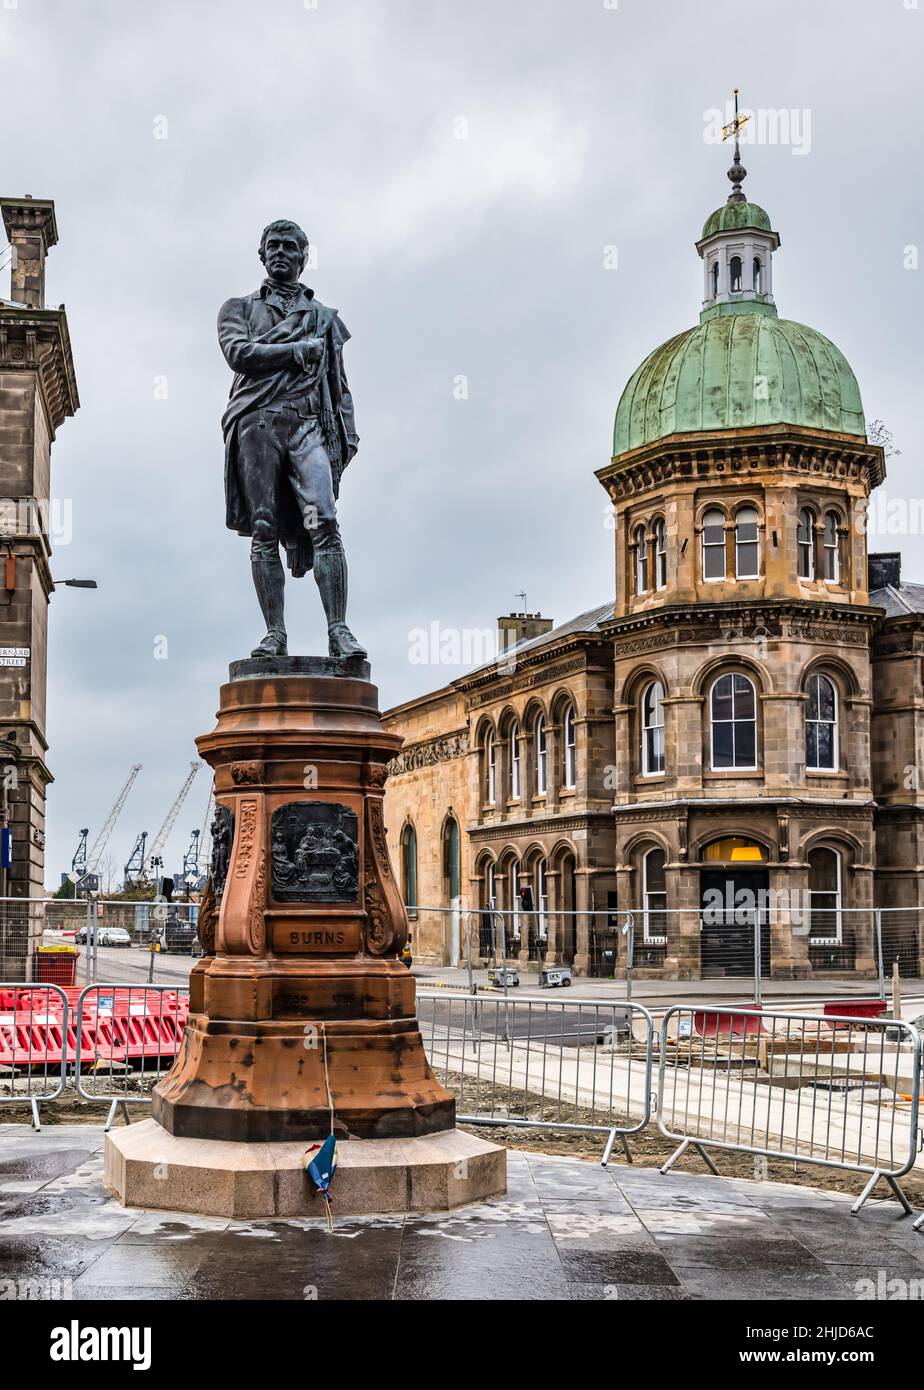 Restored Robert Burns statue reinstated after trams construction work with Corn Exchange building, Bernard Street, Leith, Edinburgh, Scotland Stock Photo